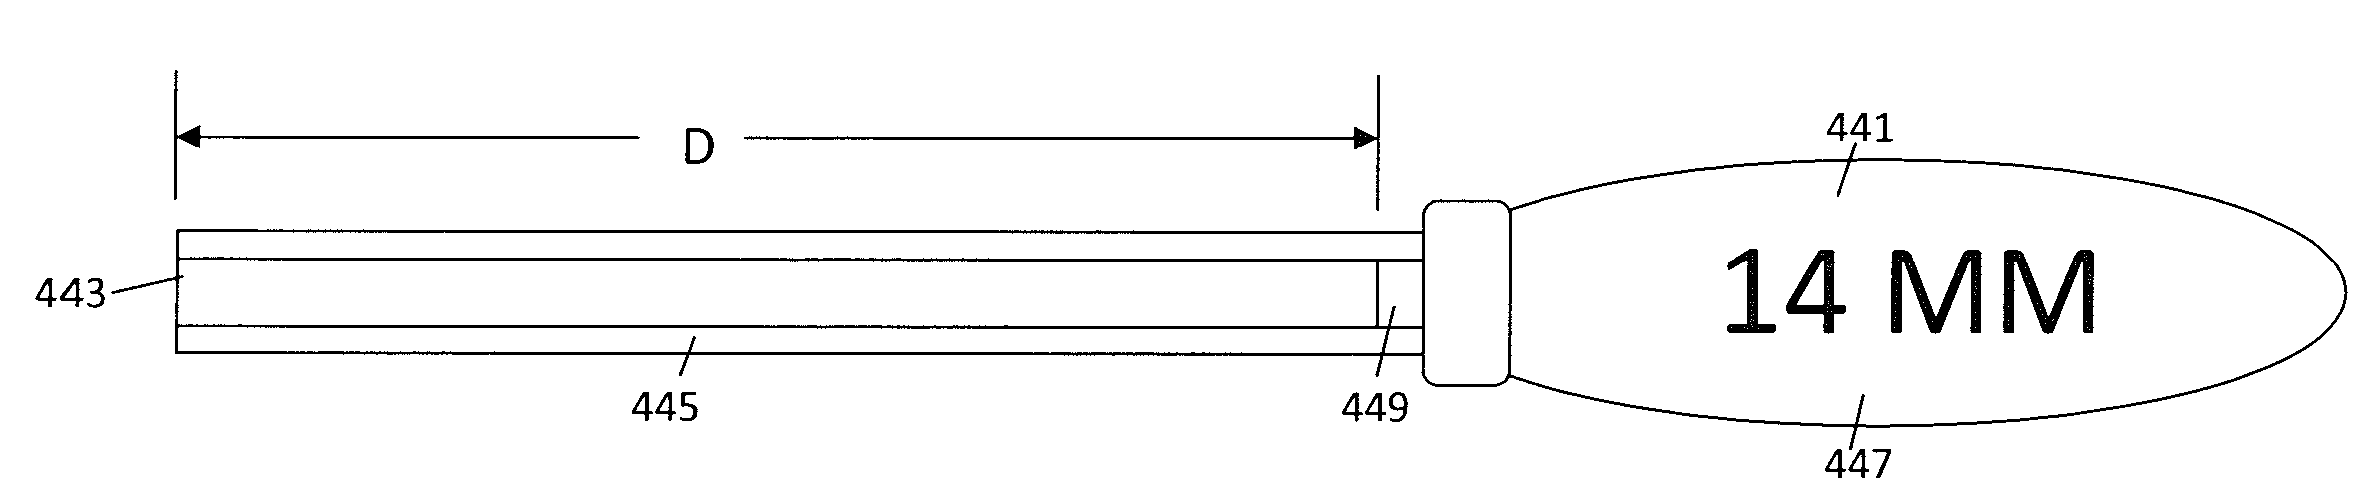 Casper pin apparatus and method of use